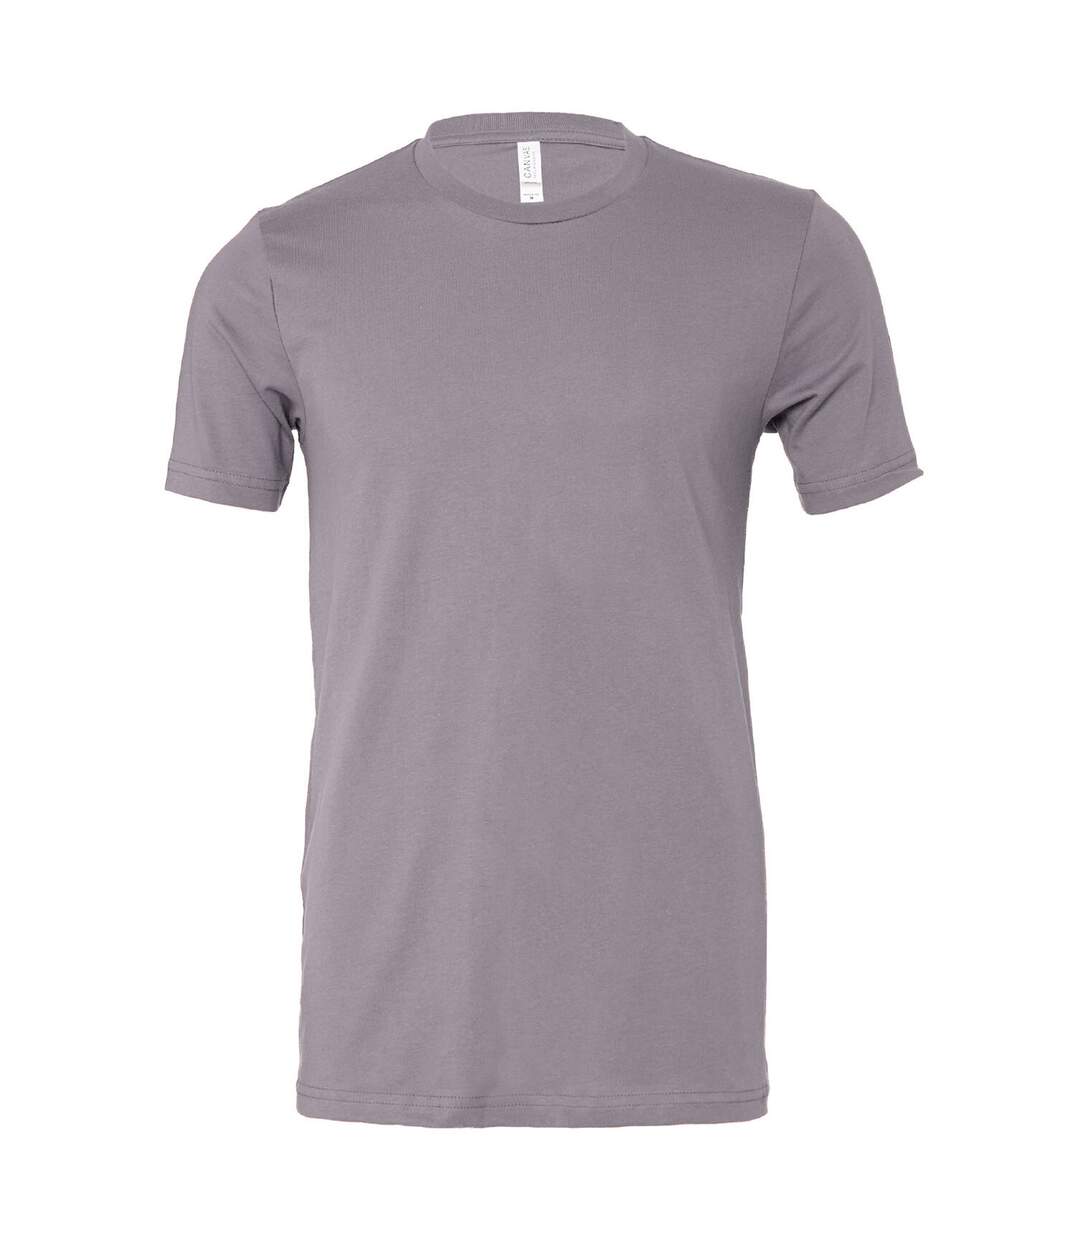 B & C - T-shirt à col rond - Mixte (Gris) - UTRW5722